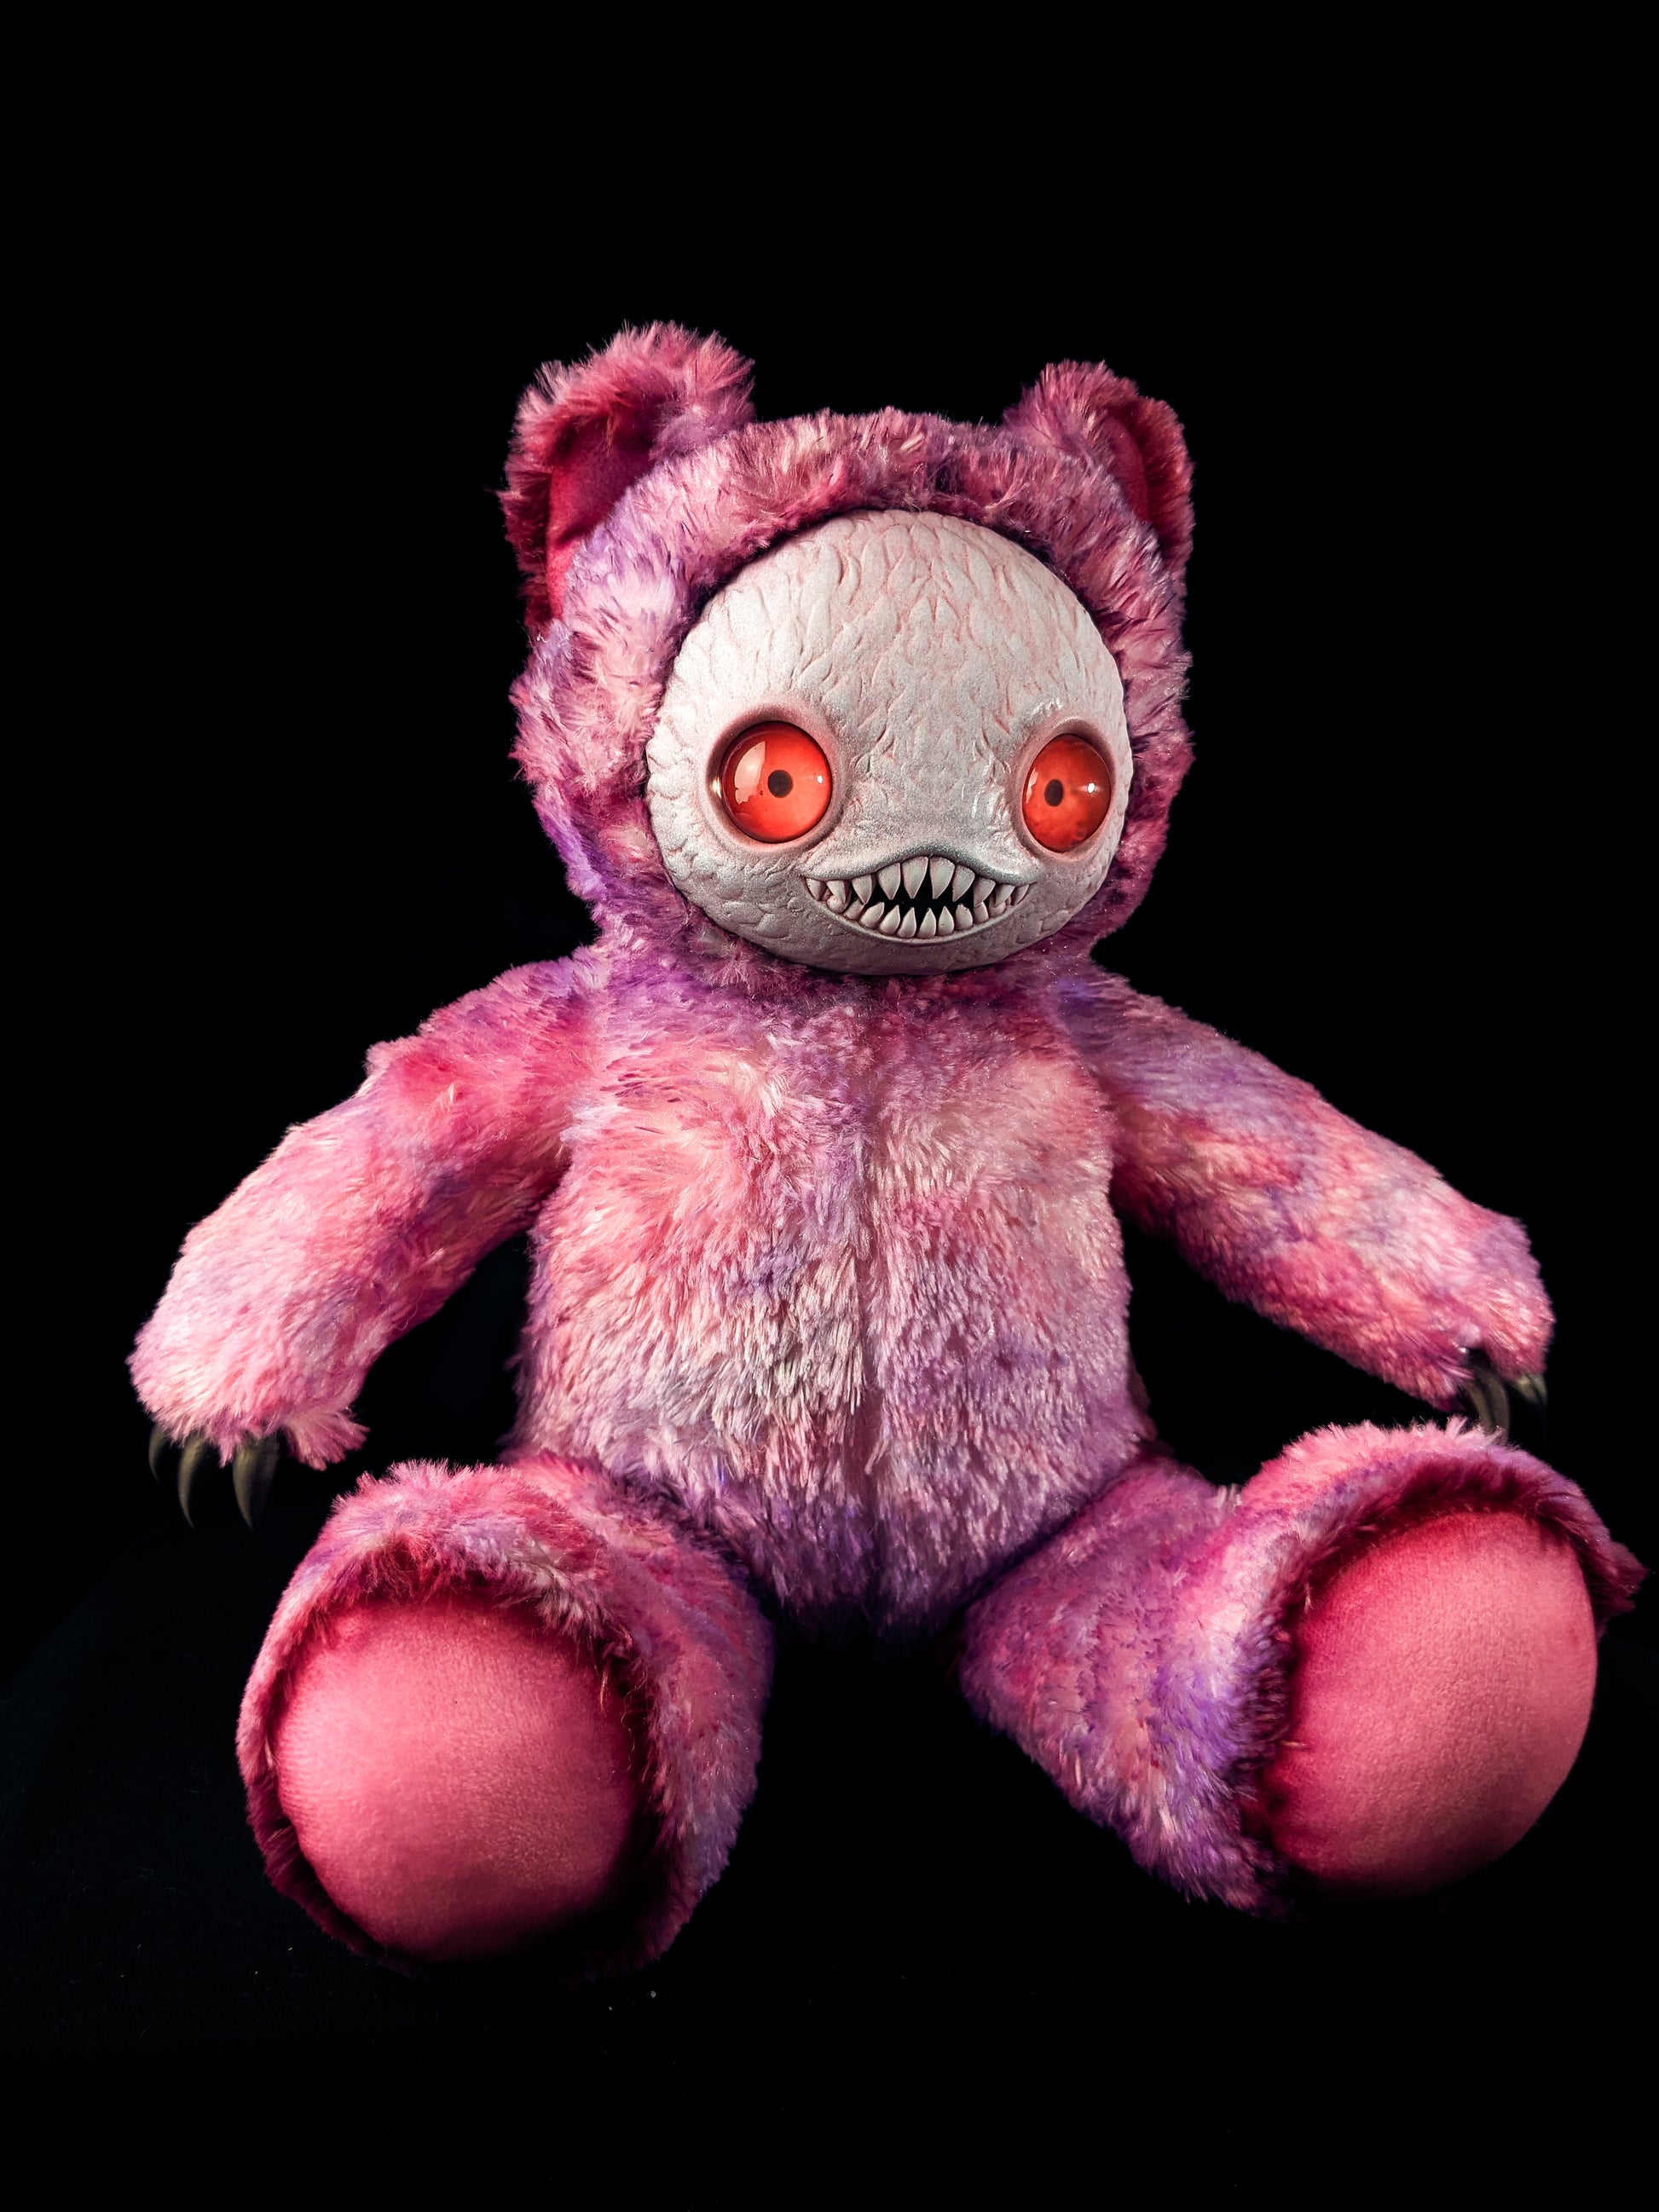 Mental Meow: NINGEN - CRYPTCRITS Handmade Black Creepy Cute Monster Art Doll Plush Toy for Gothic Goddesses